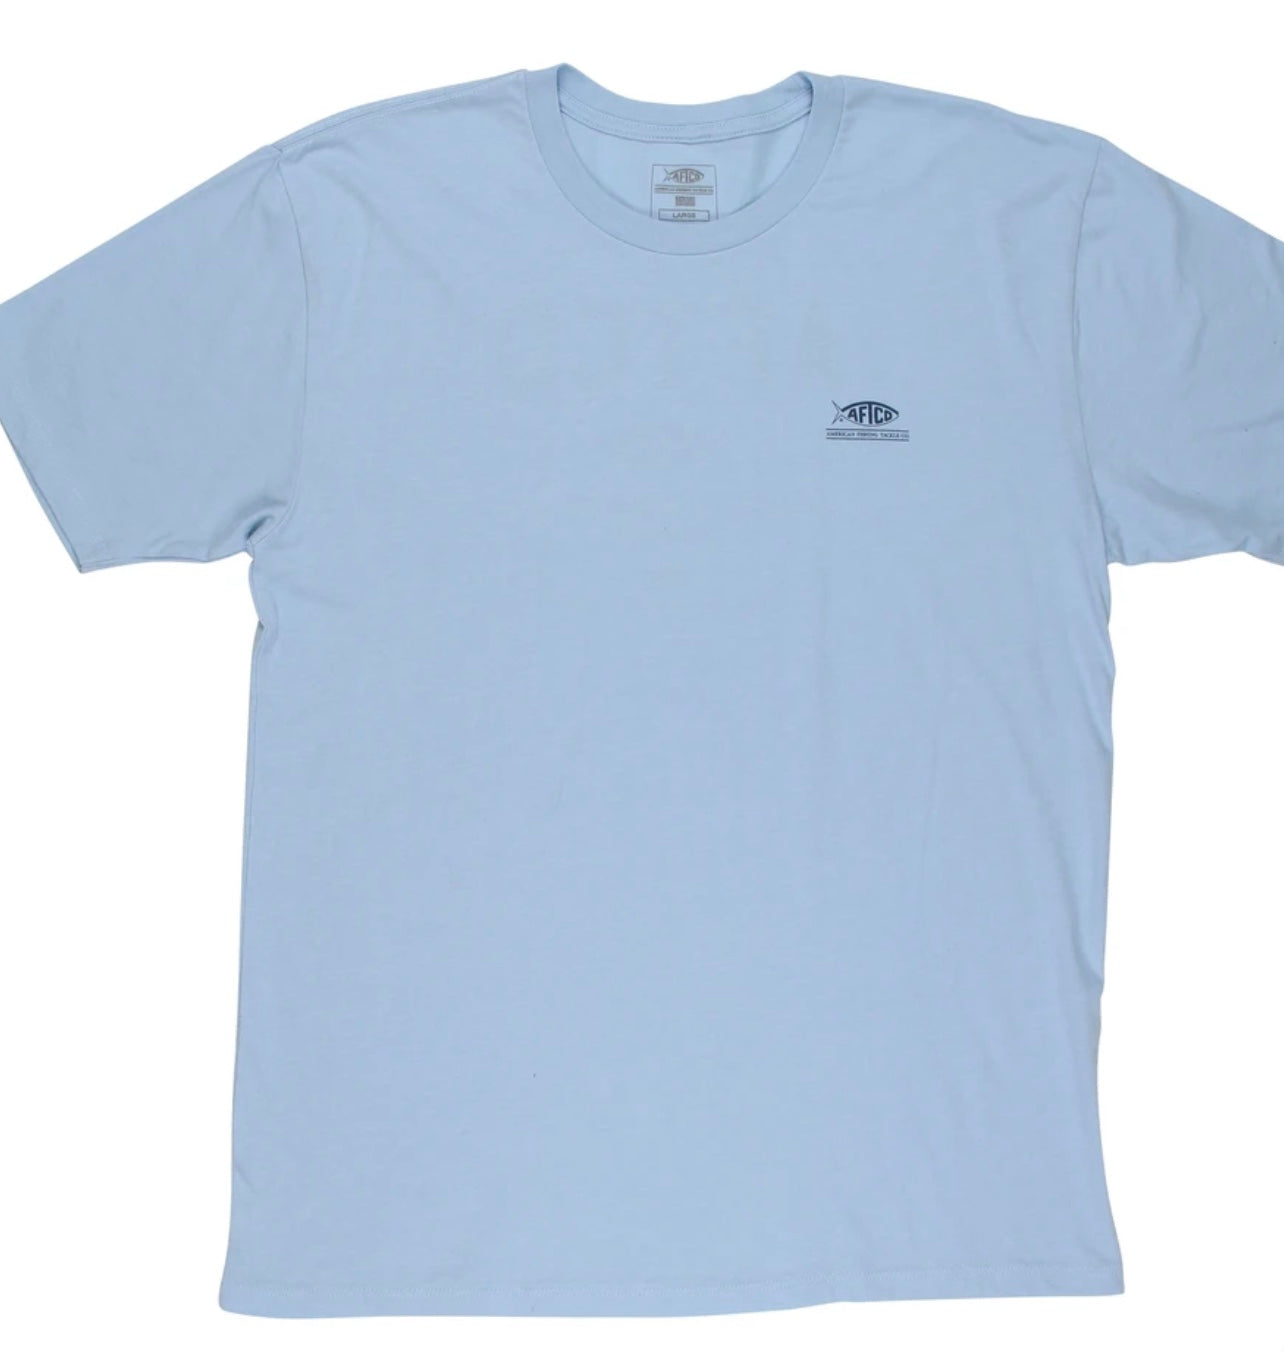 AFTCO Blue T-Shirts for Men